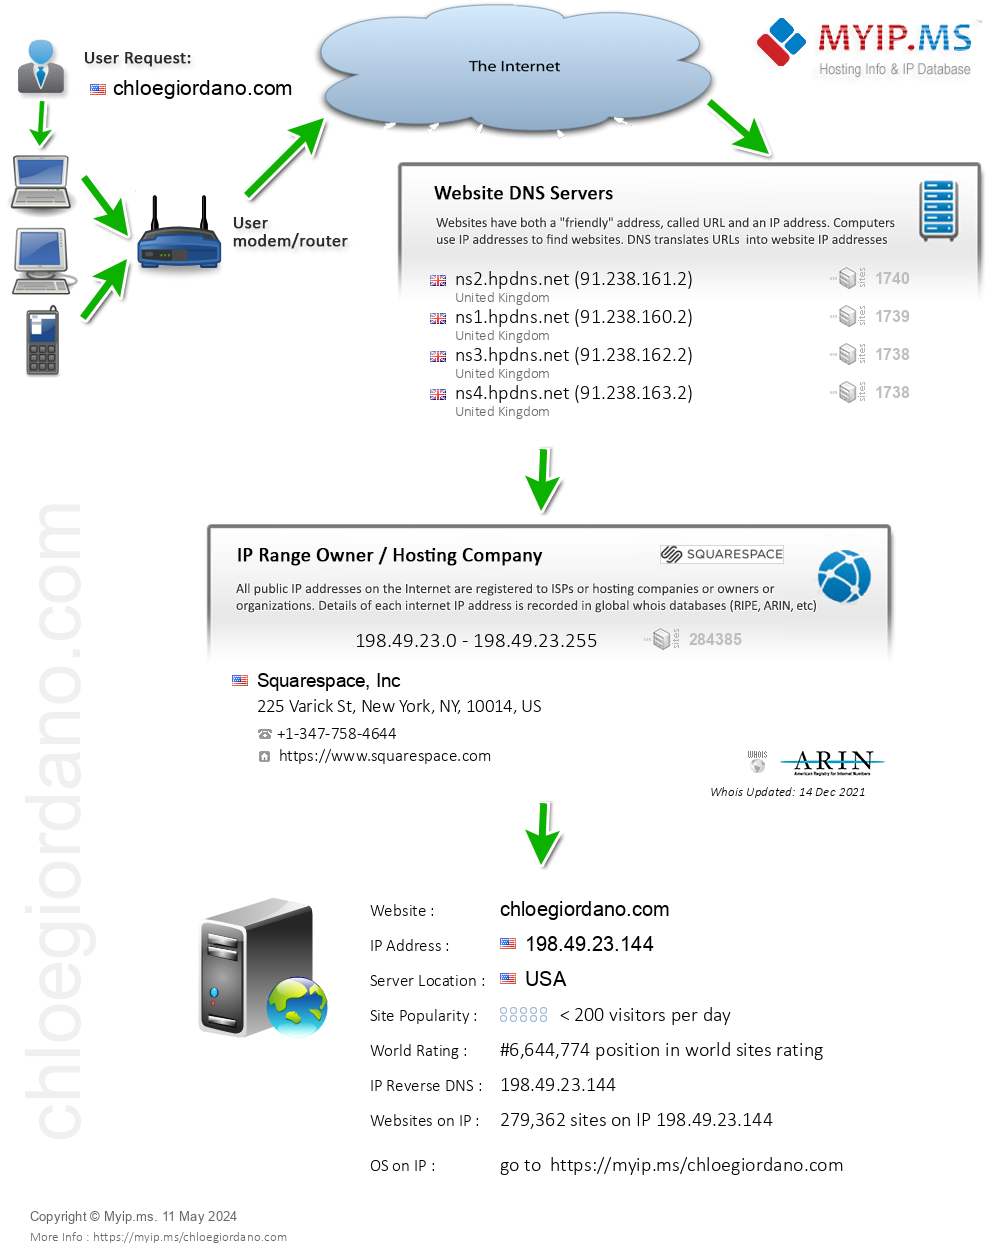 Chloegiordano.com - Website Hosting Visual IP Diagram